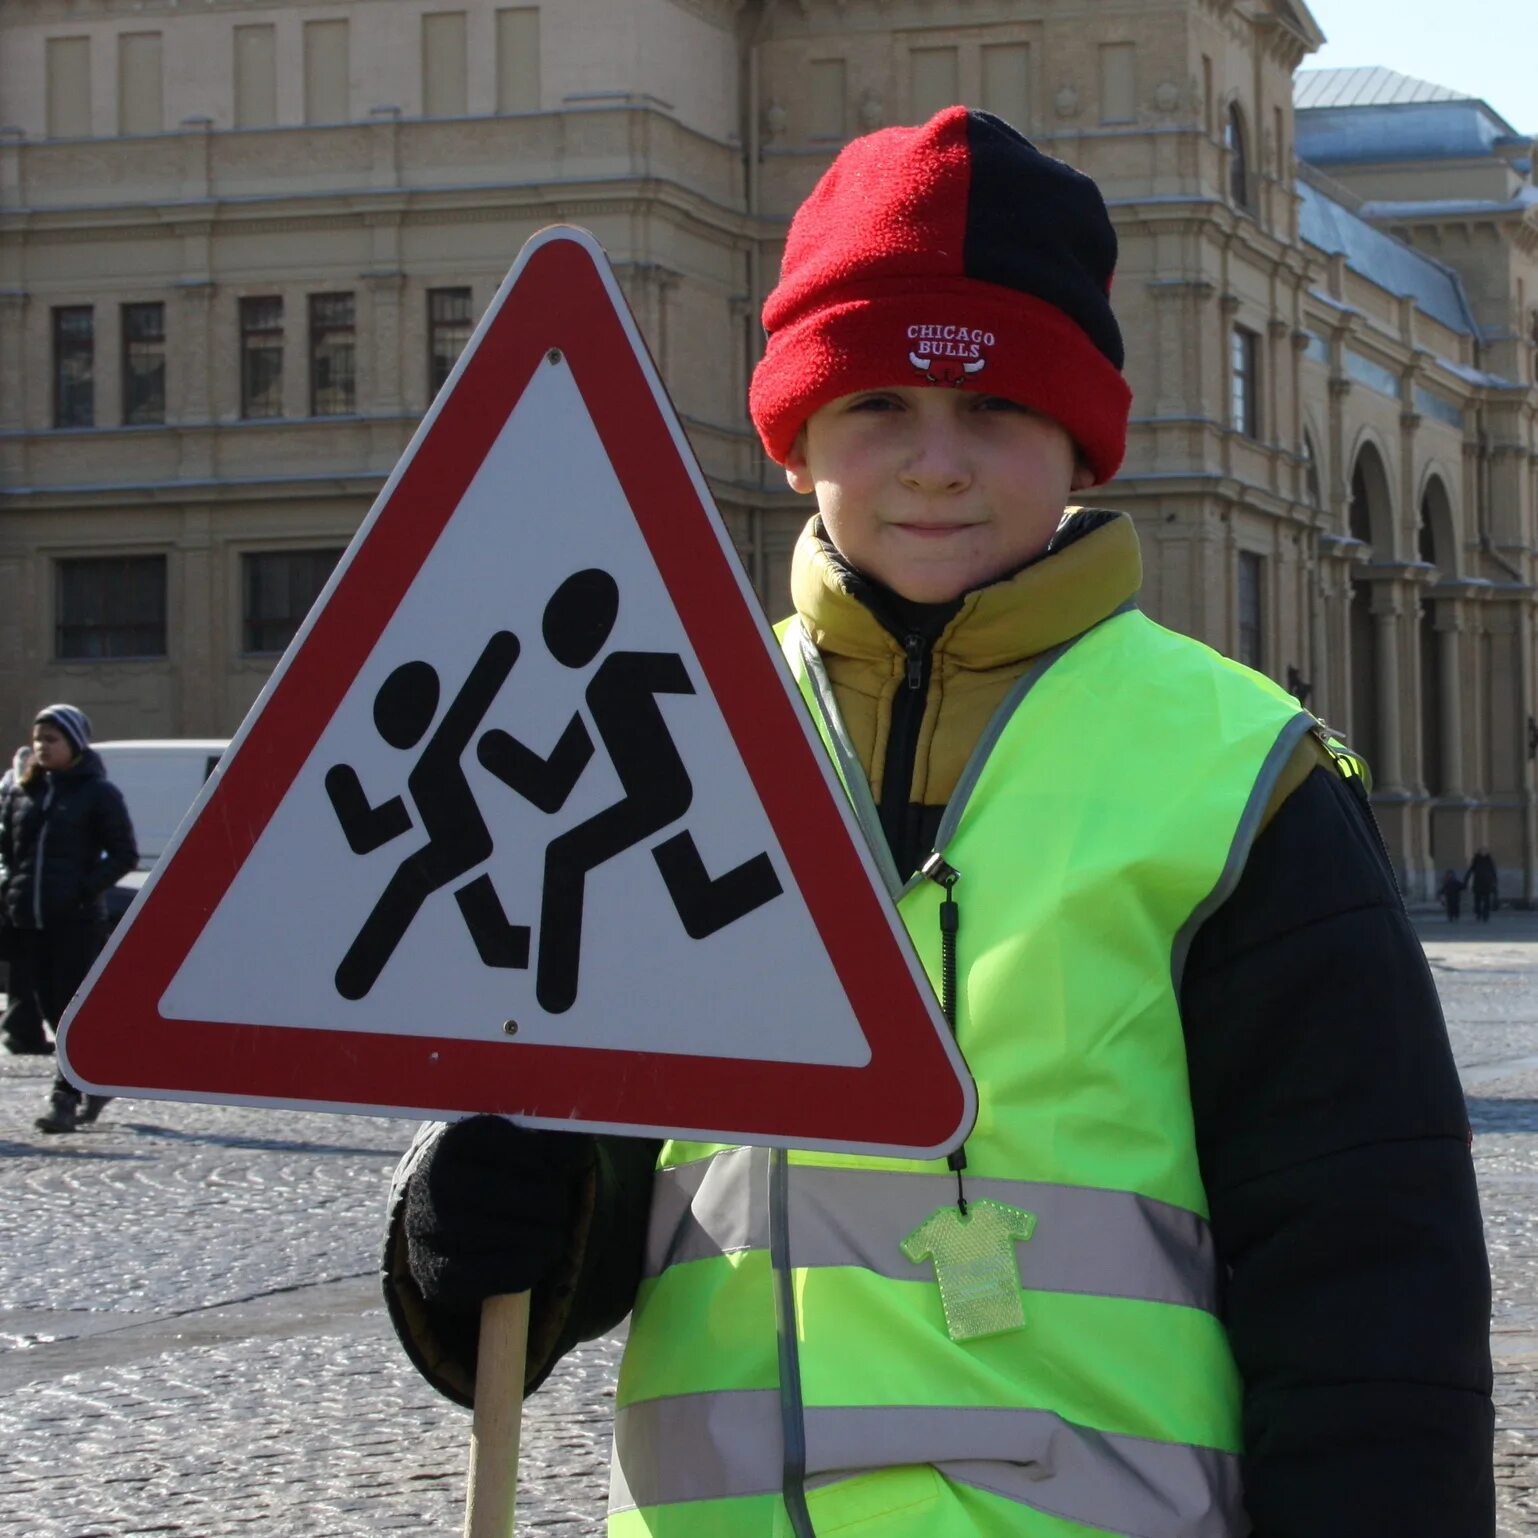 Внимание дети на дороге. Осторожно дети на дороге. Внимание дети. Внимание пешеход на дороге.